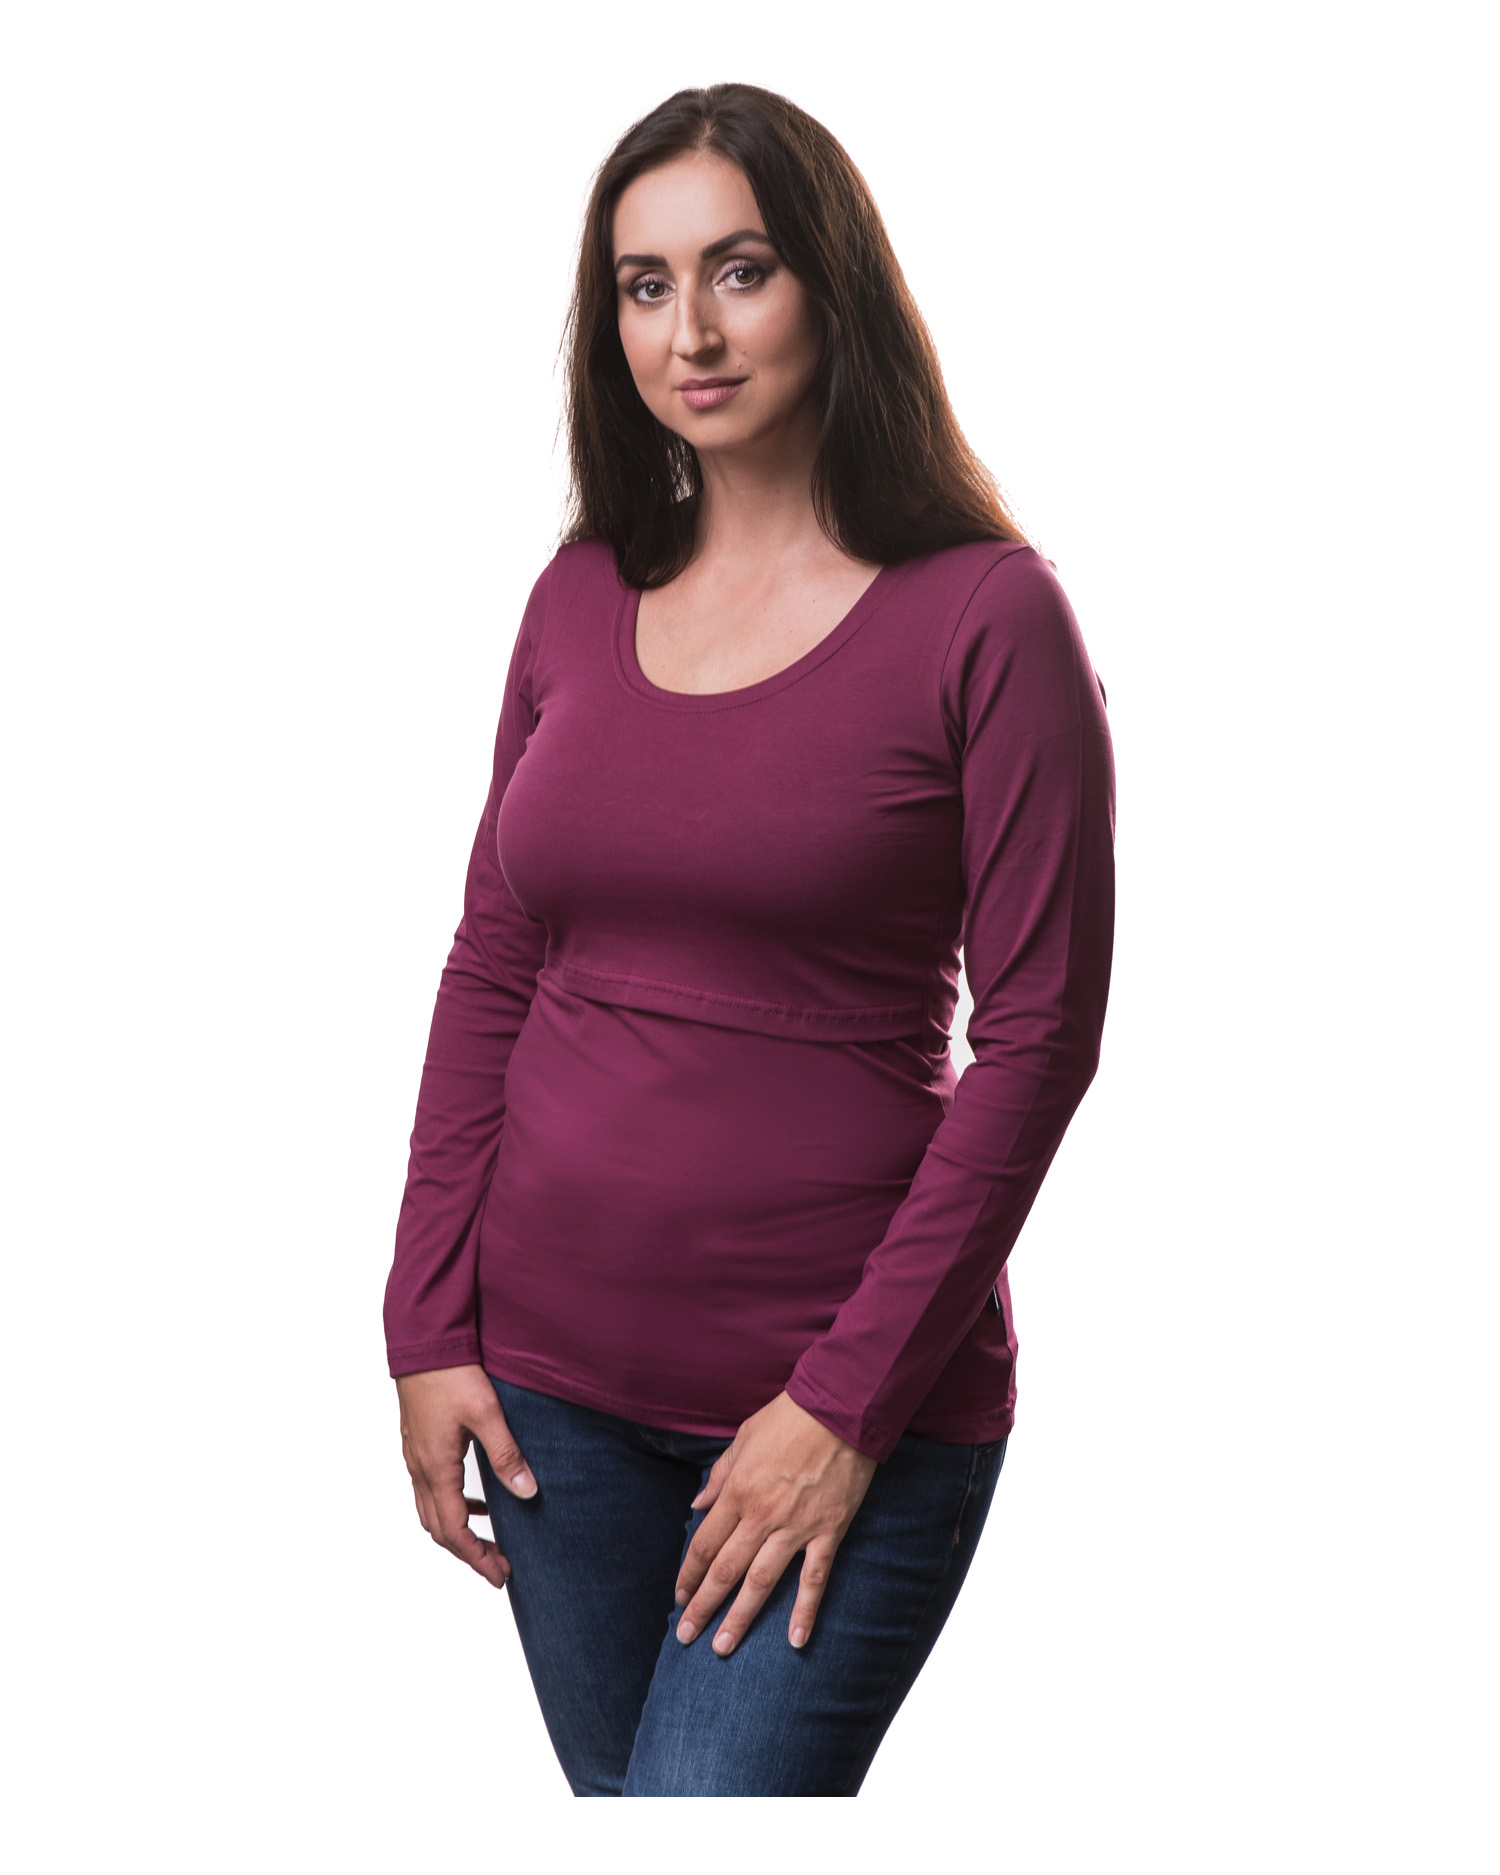 Breast-feeding T-shirt Katerina, long sleeves, cyclamen